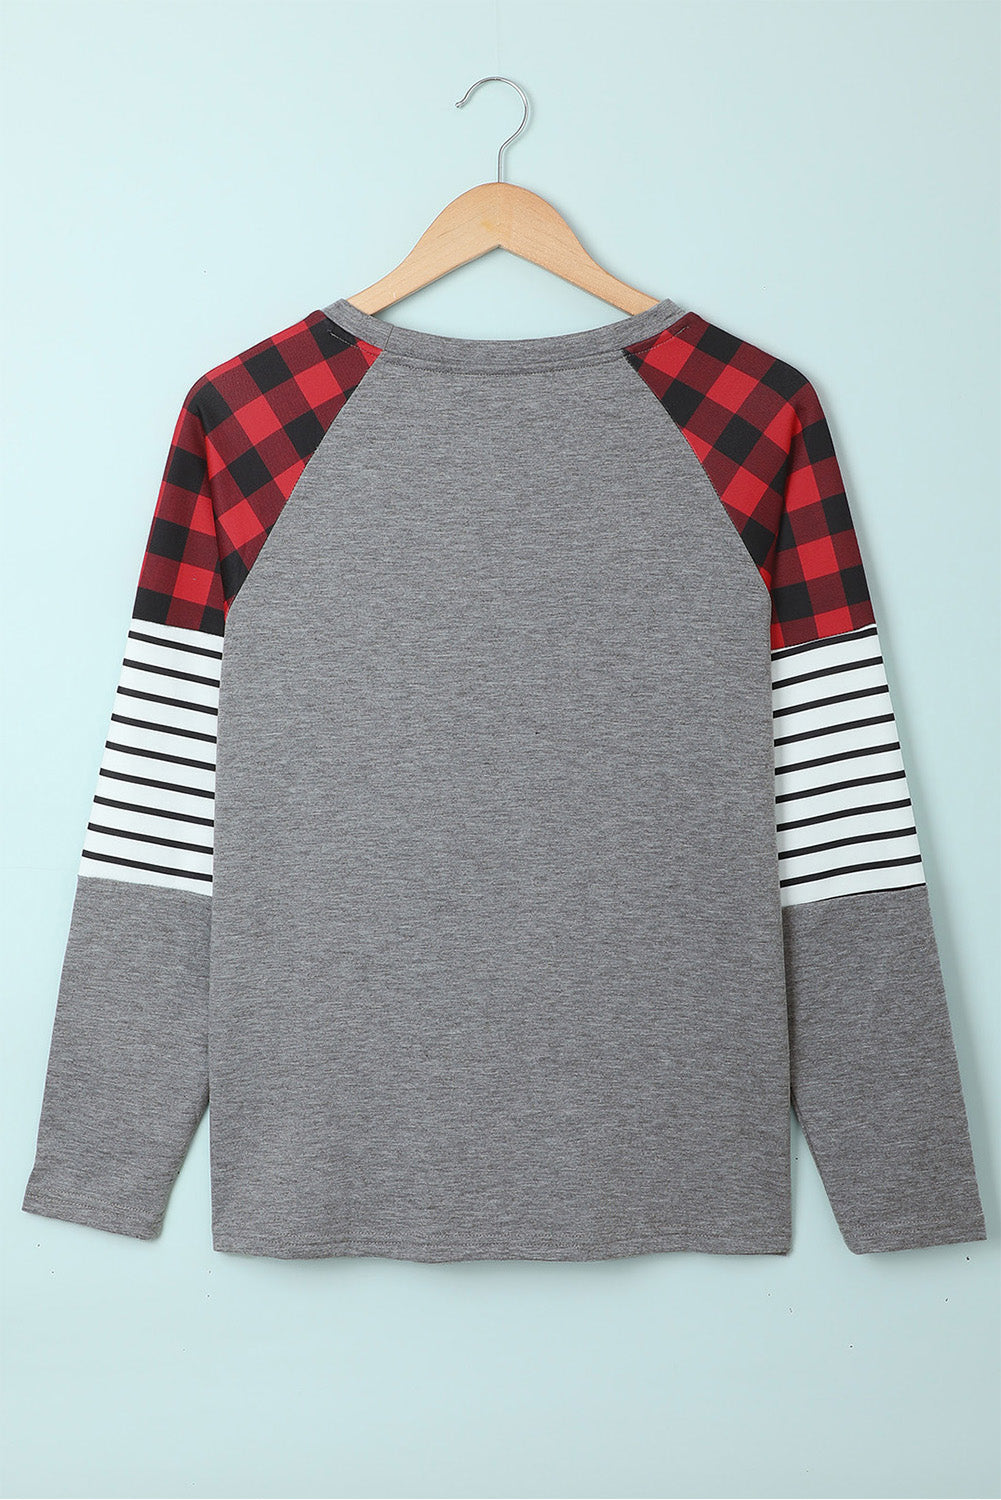 Grey Merry Christmas Striped Plaid Casual Graphic Long Sleeve Sweatshirt